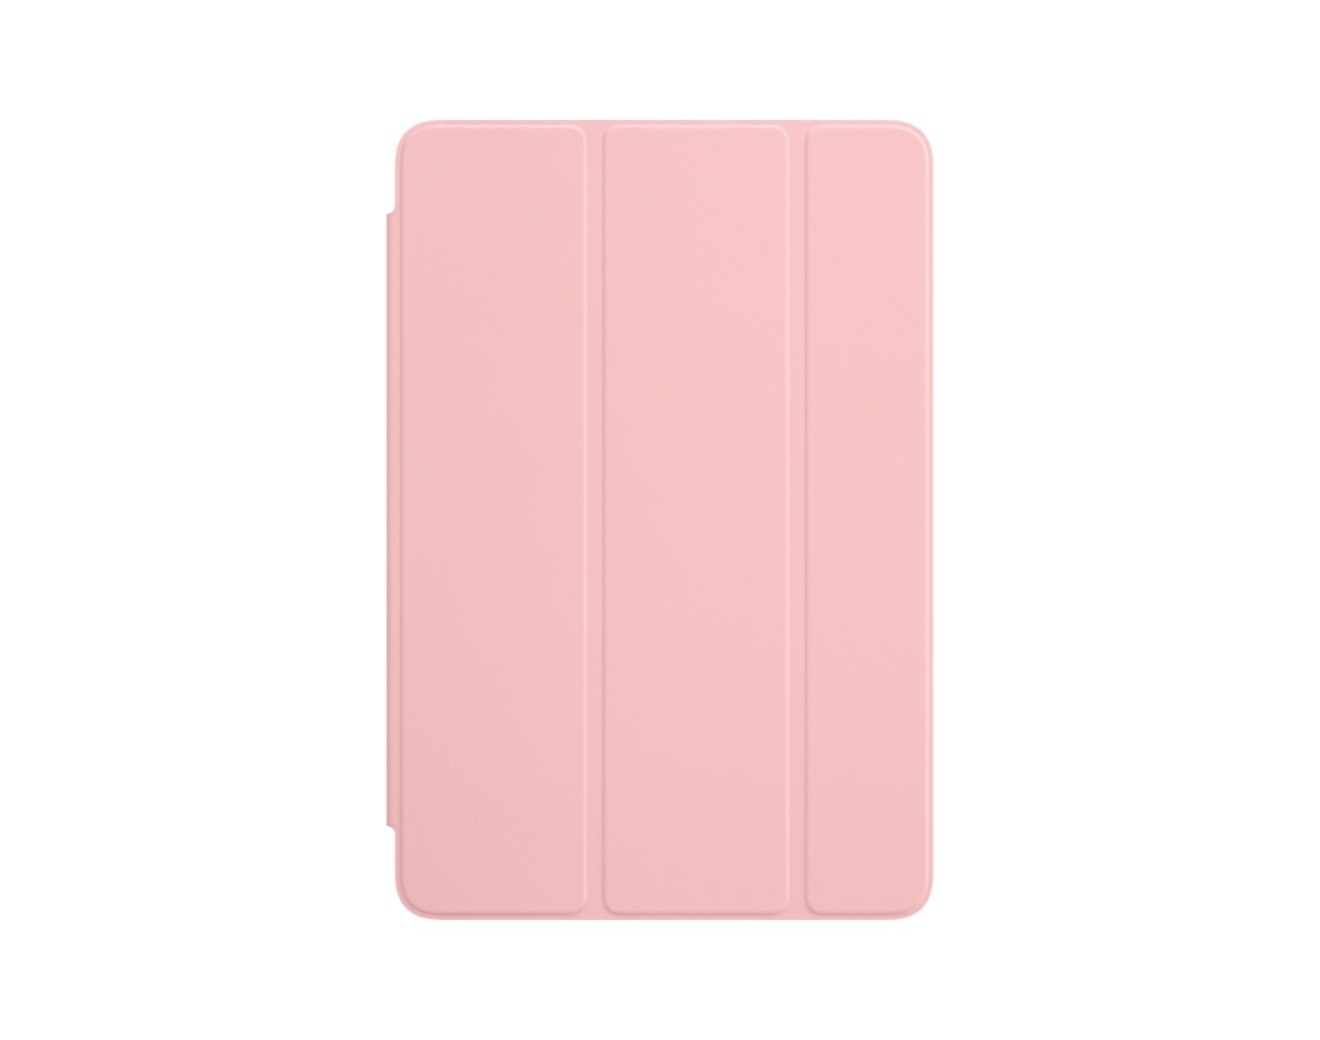 Apple Smart Cover за iPad Mini 4 - Pink